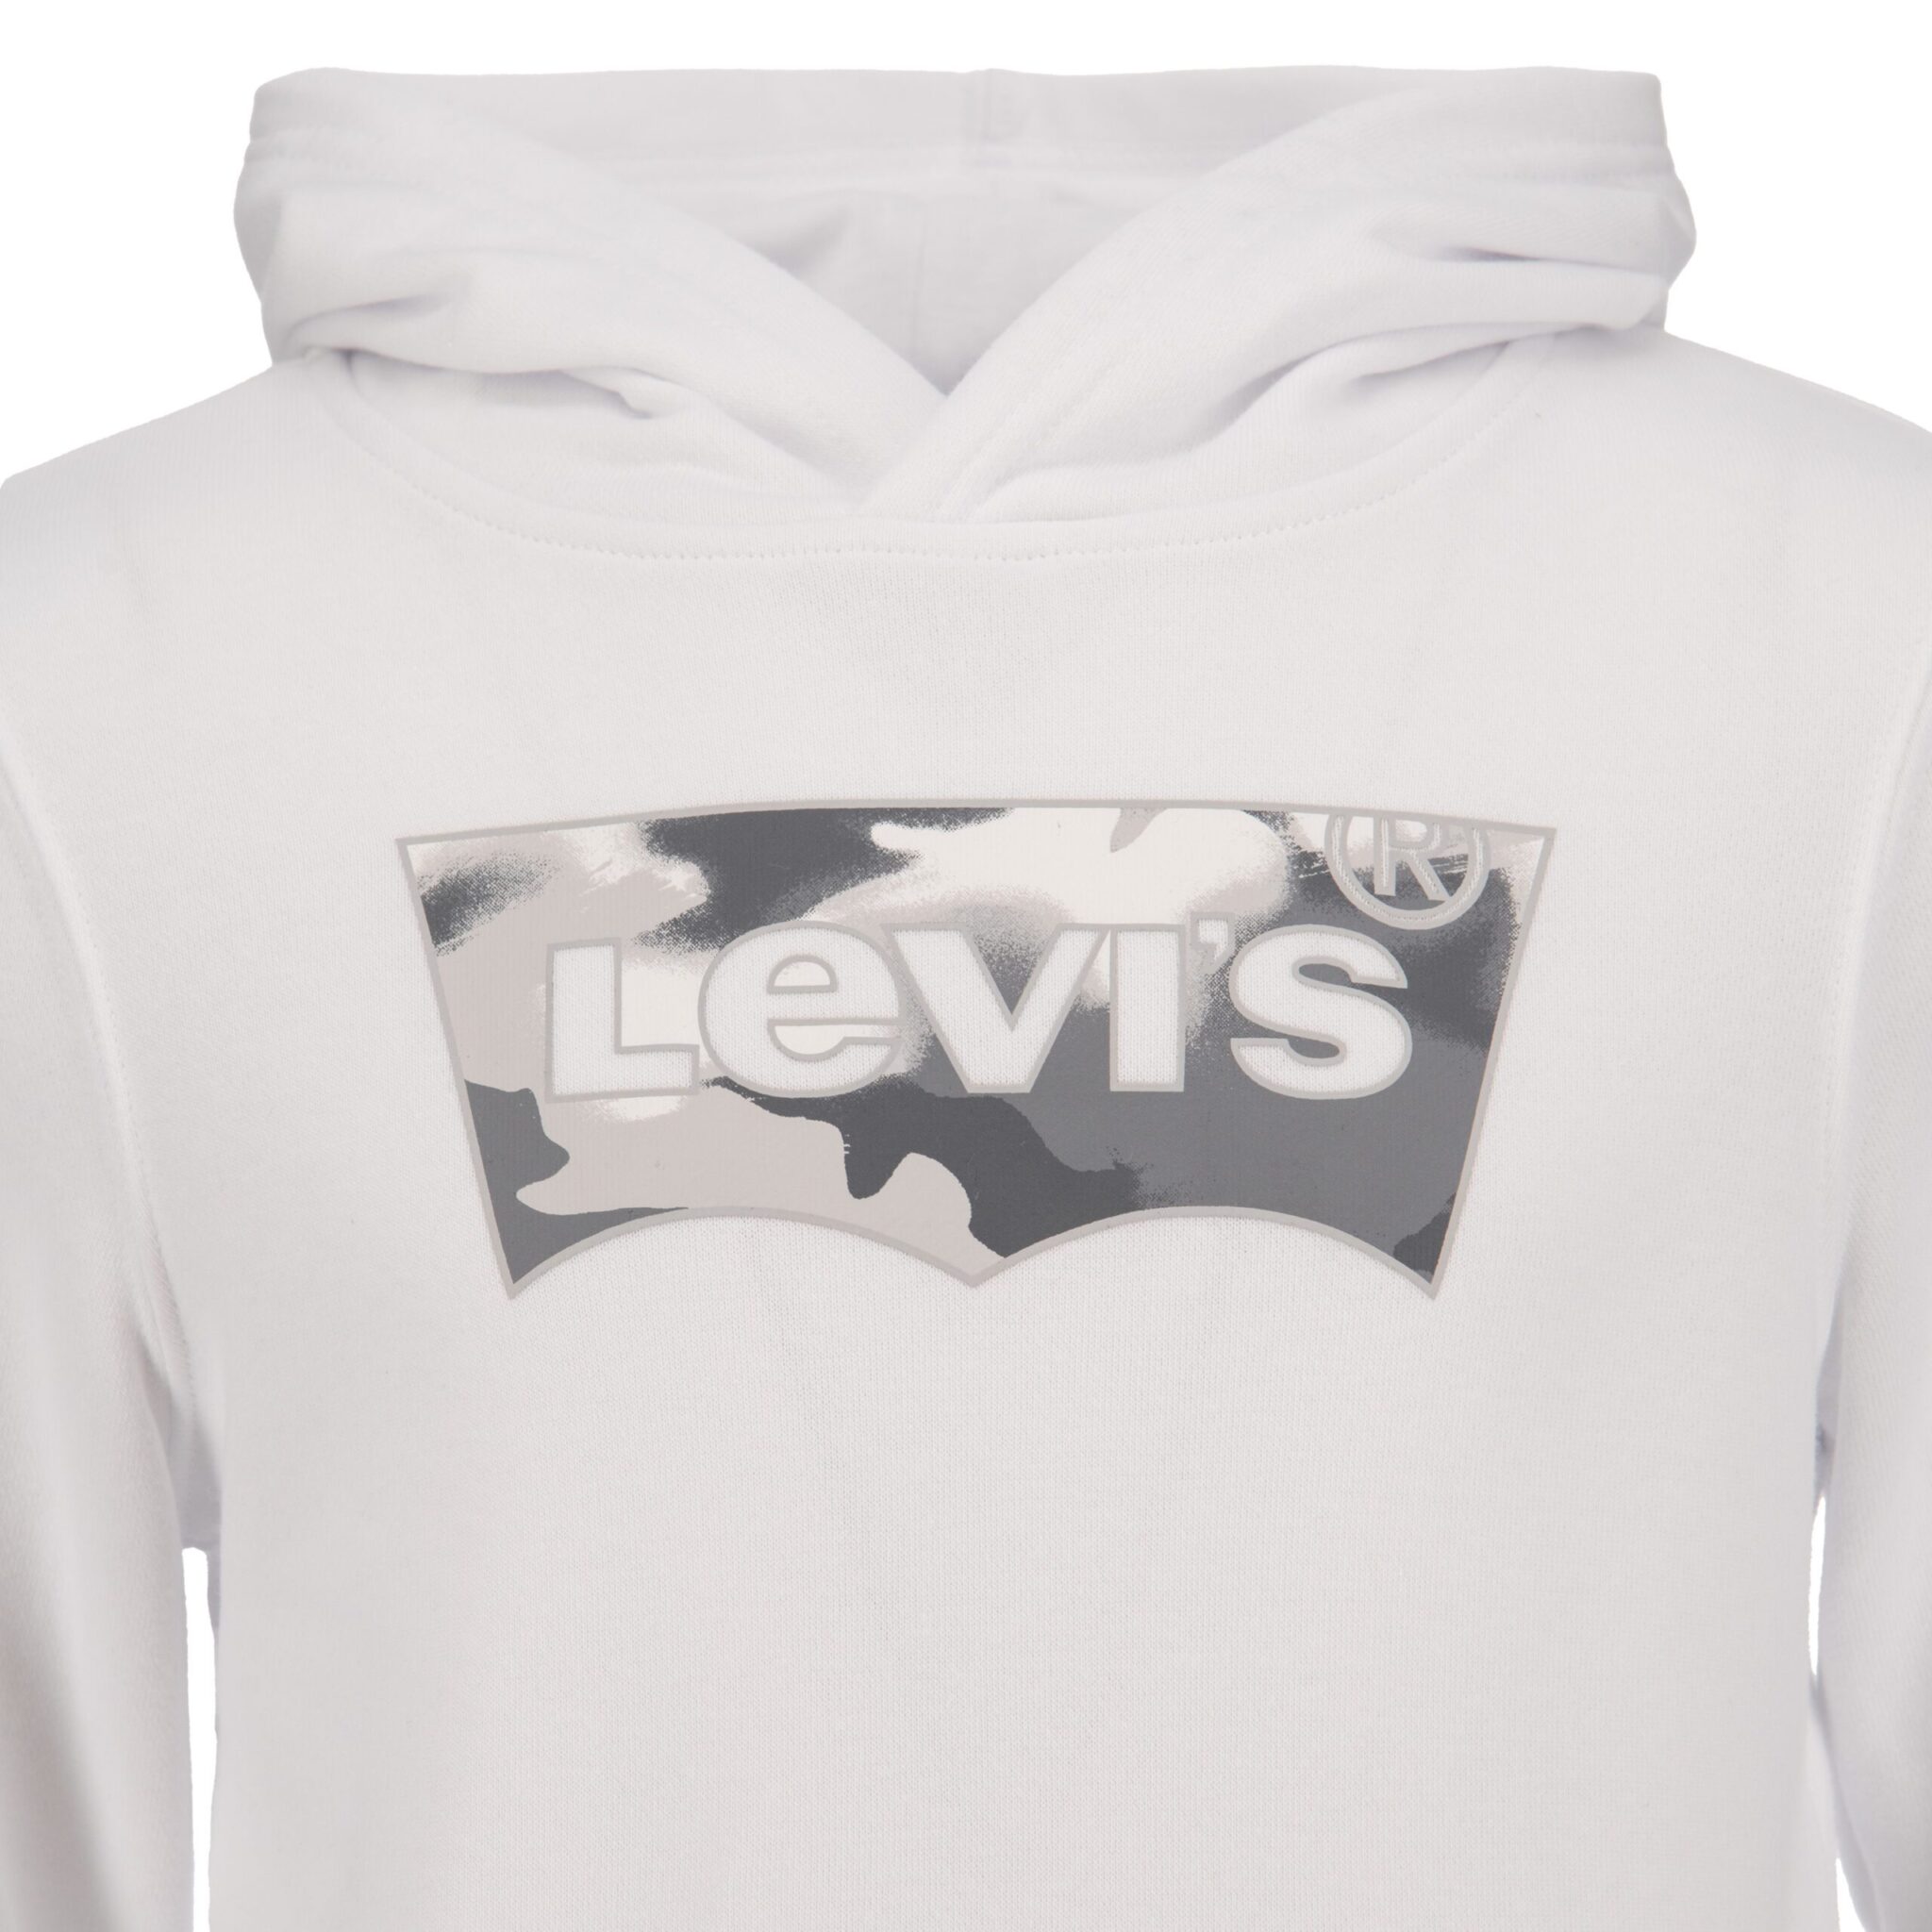 Levi's kids white hoodie close up of logo